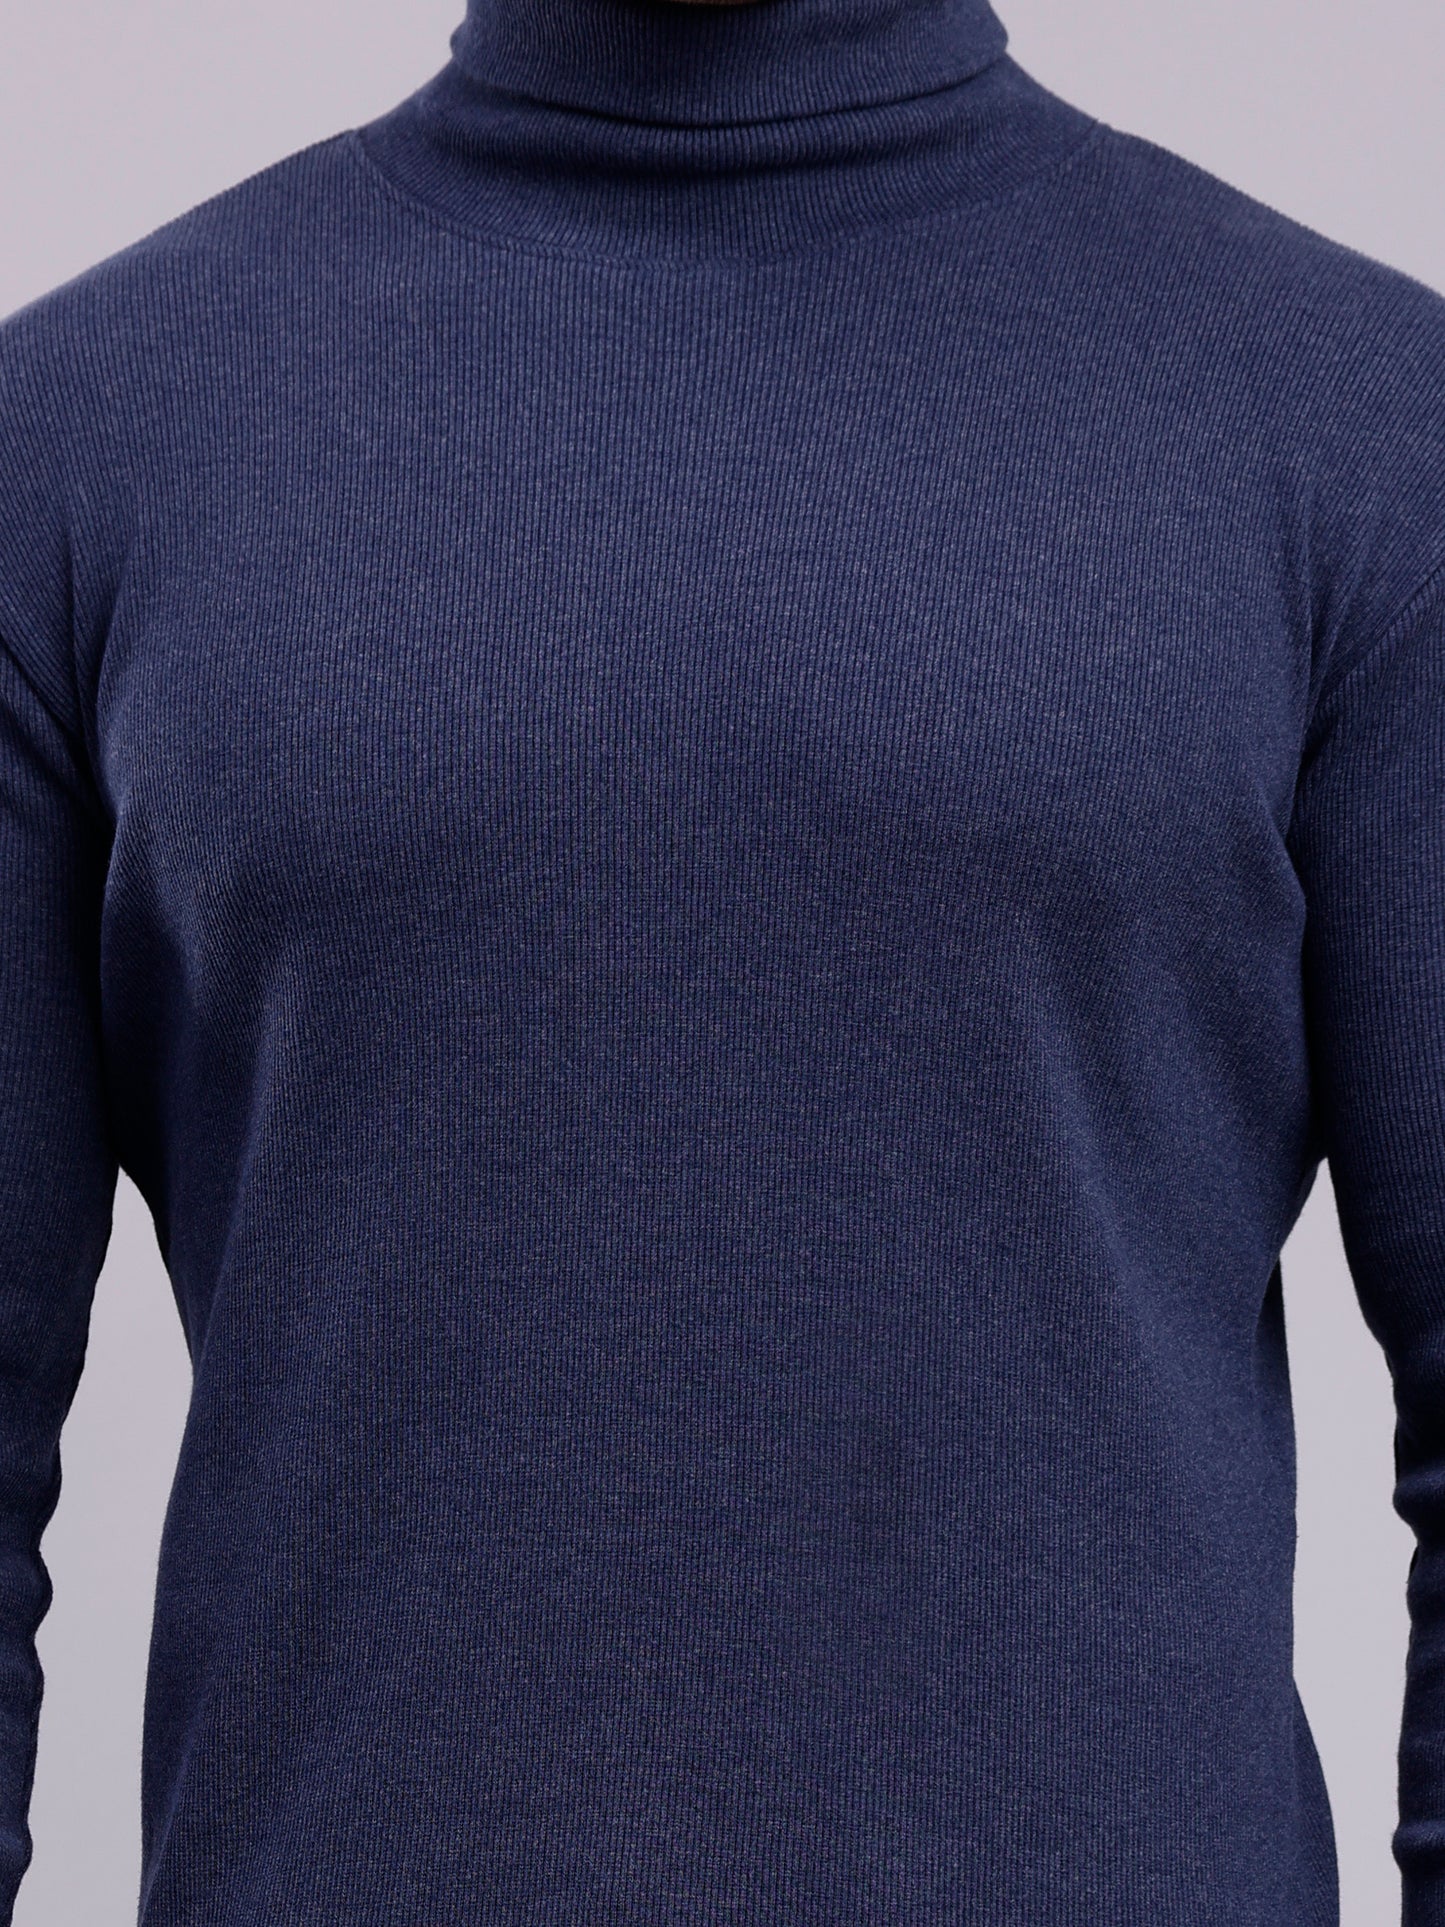 NUEVOSPORTA Mens Solid Blue Turtle Neck Rib Sweater | Basic High Neck Sweater | Plain Jumper